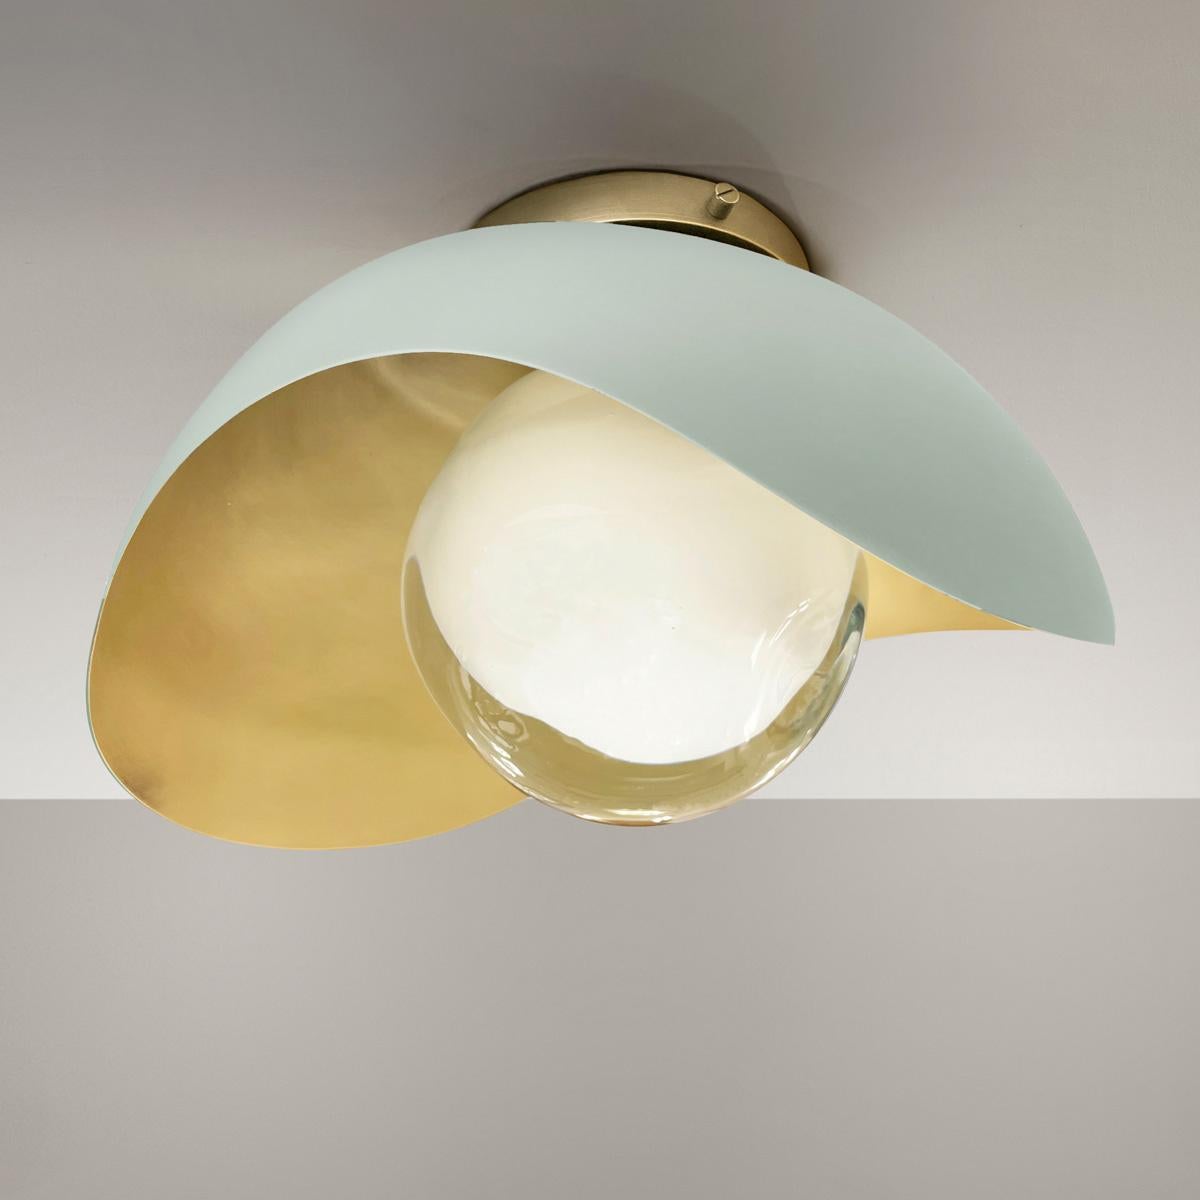 Contemporary Perla Flushmount Ceiling Light by Gaspare Asaro-Satin Brass/Acqua Finish For Sale